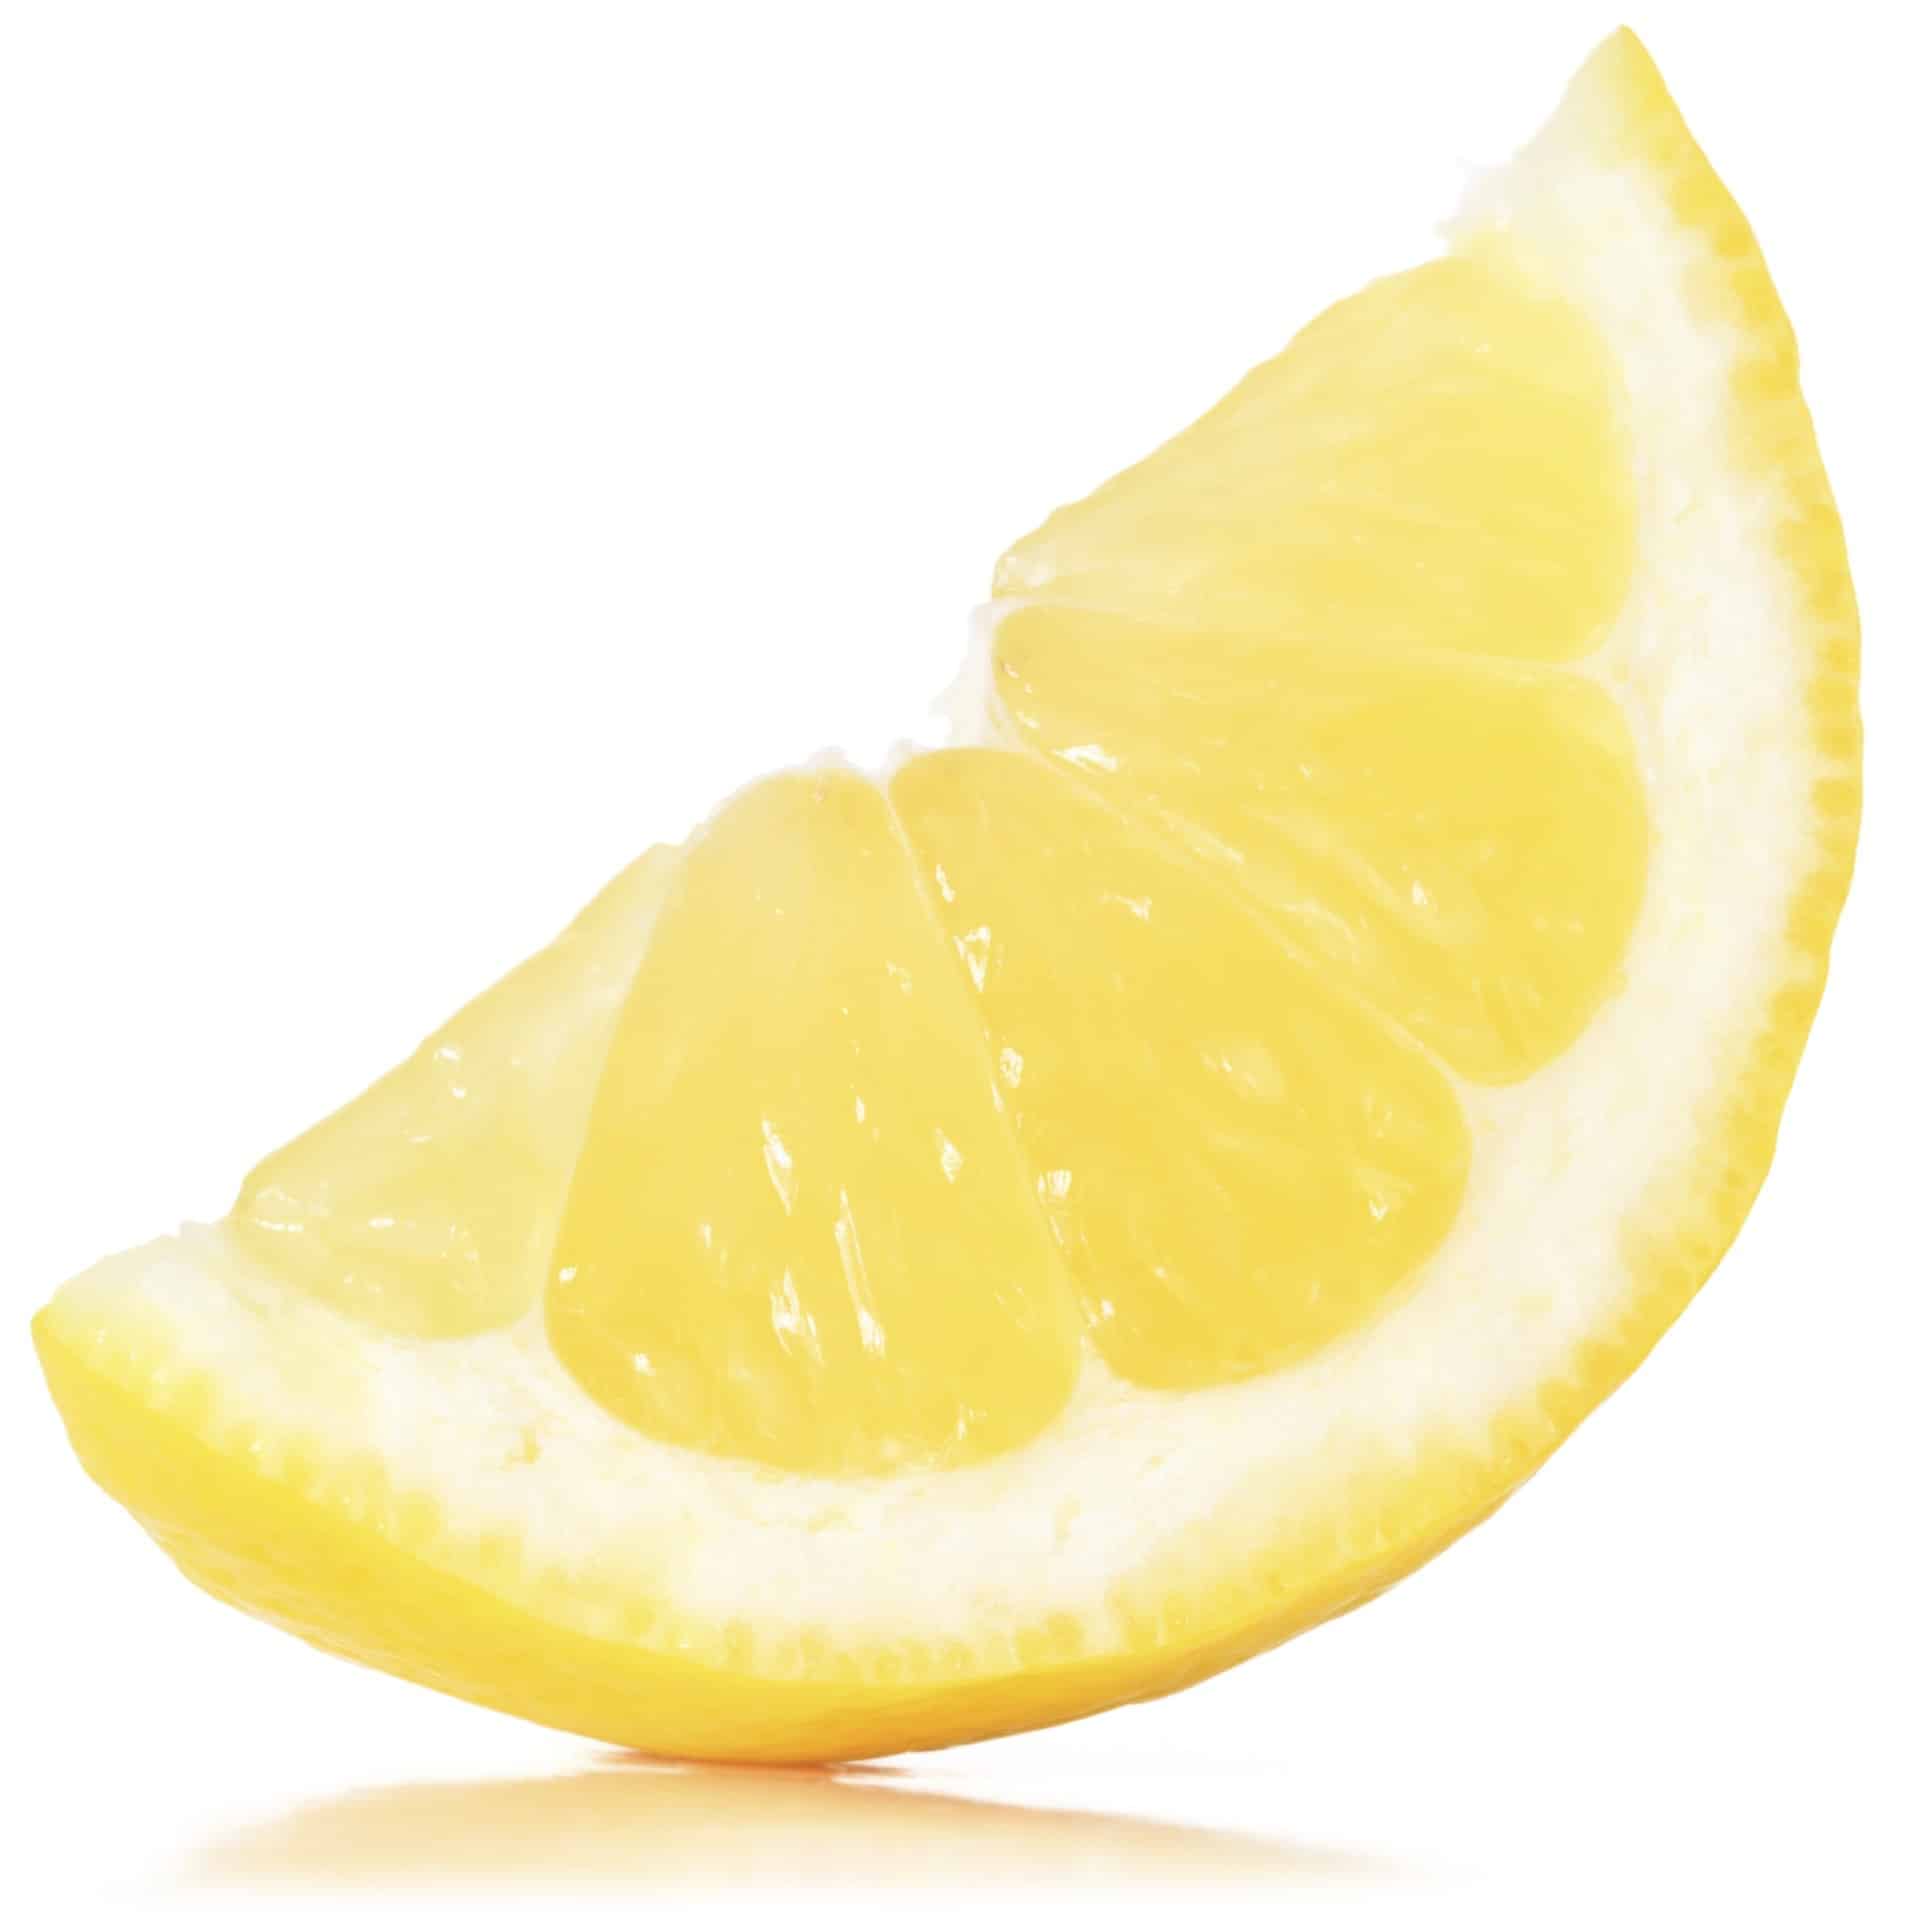 segment lemon can you segment your customers